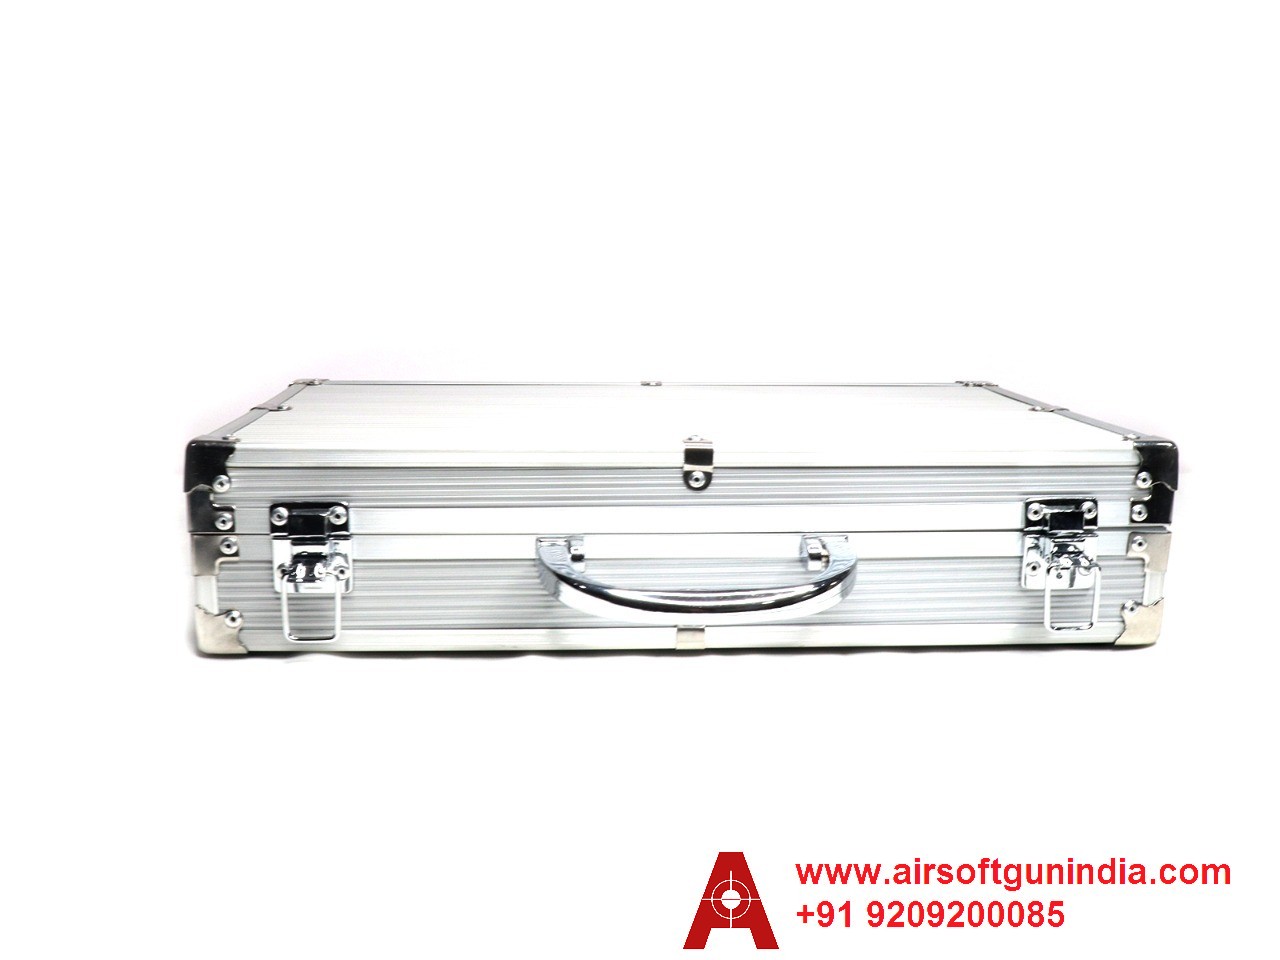 Customized Storage Gun Box With Latch By Airsoft Gun India